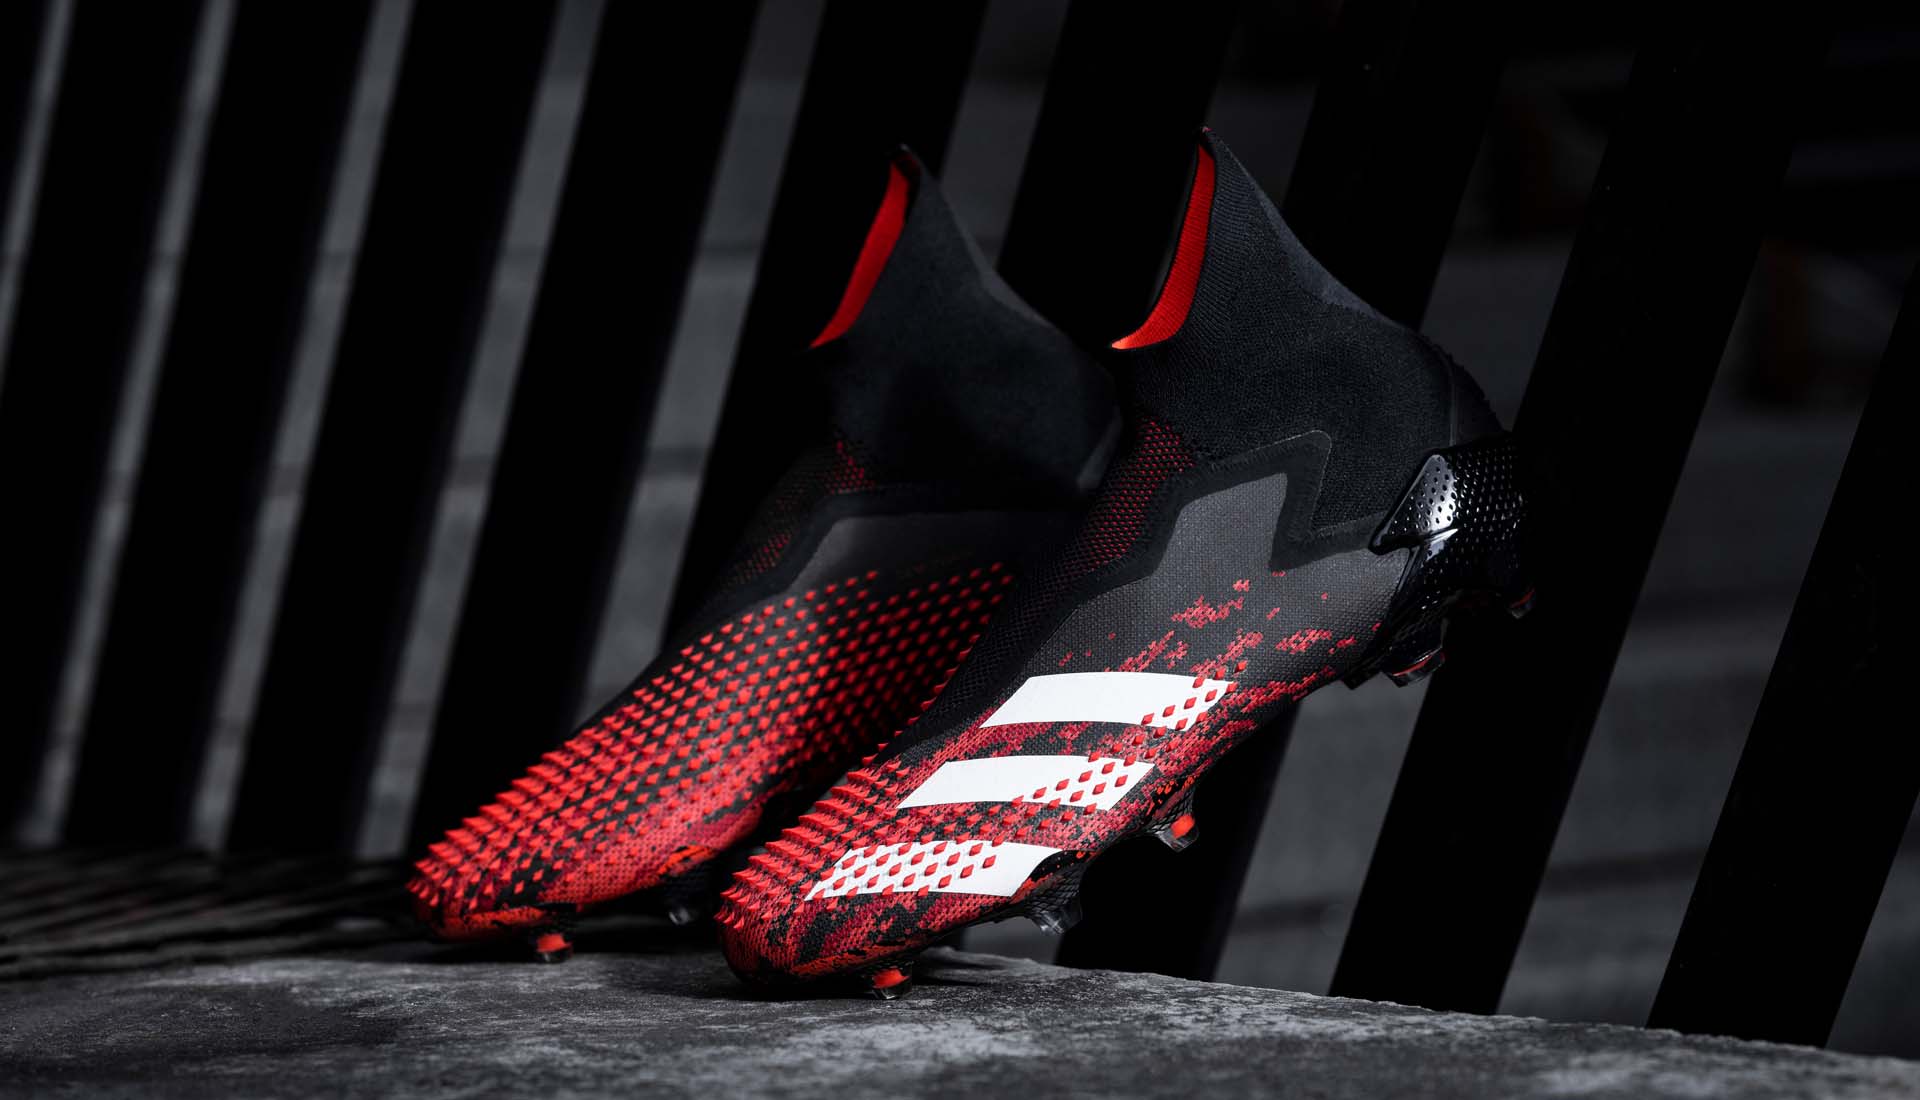 adidas Launch The Predator 20+ Mutator Football Boots - SoccerBible